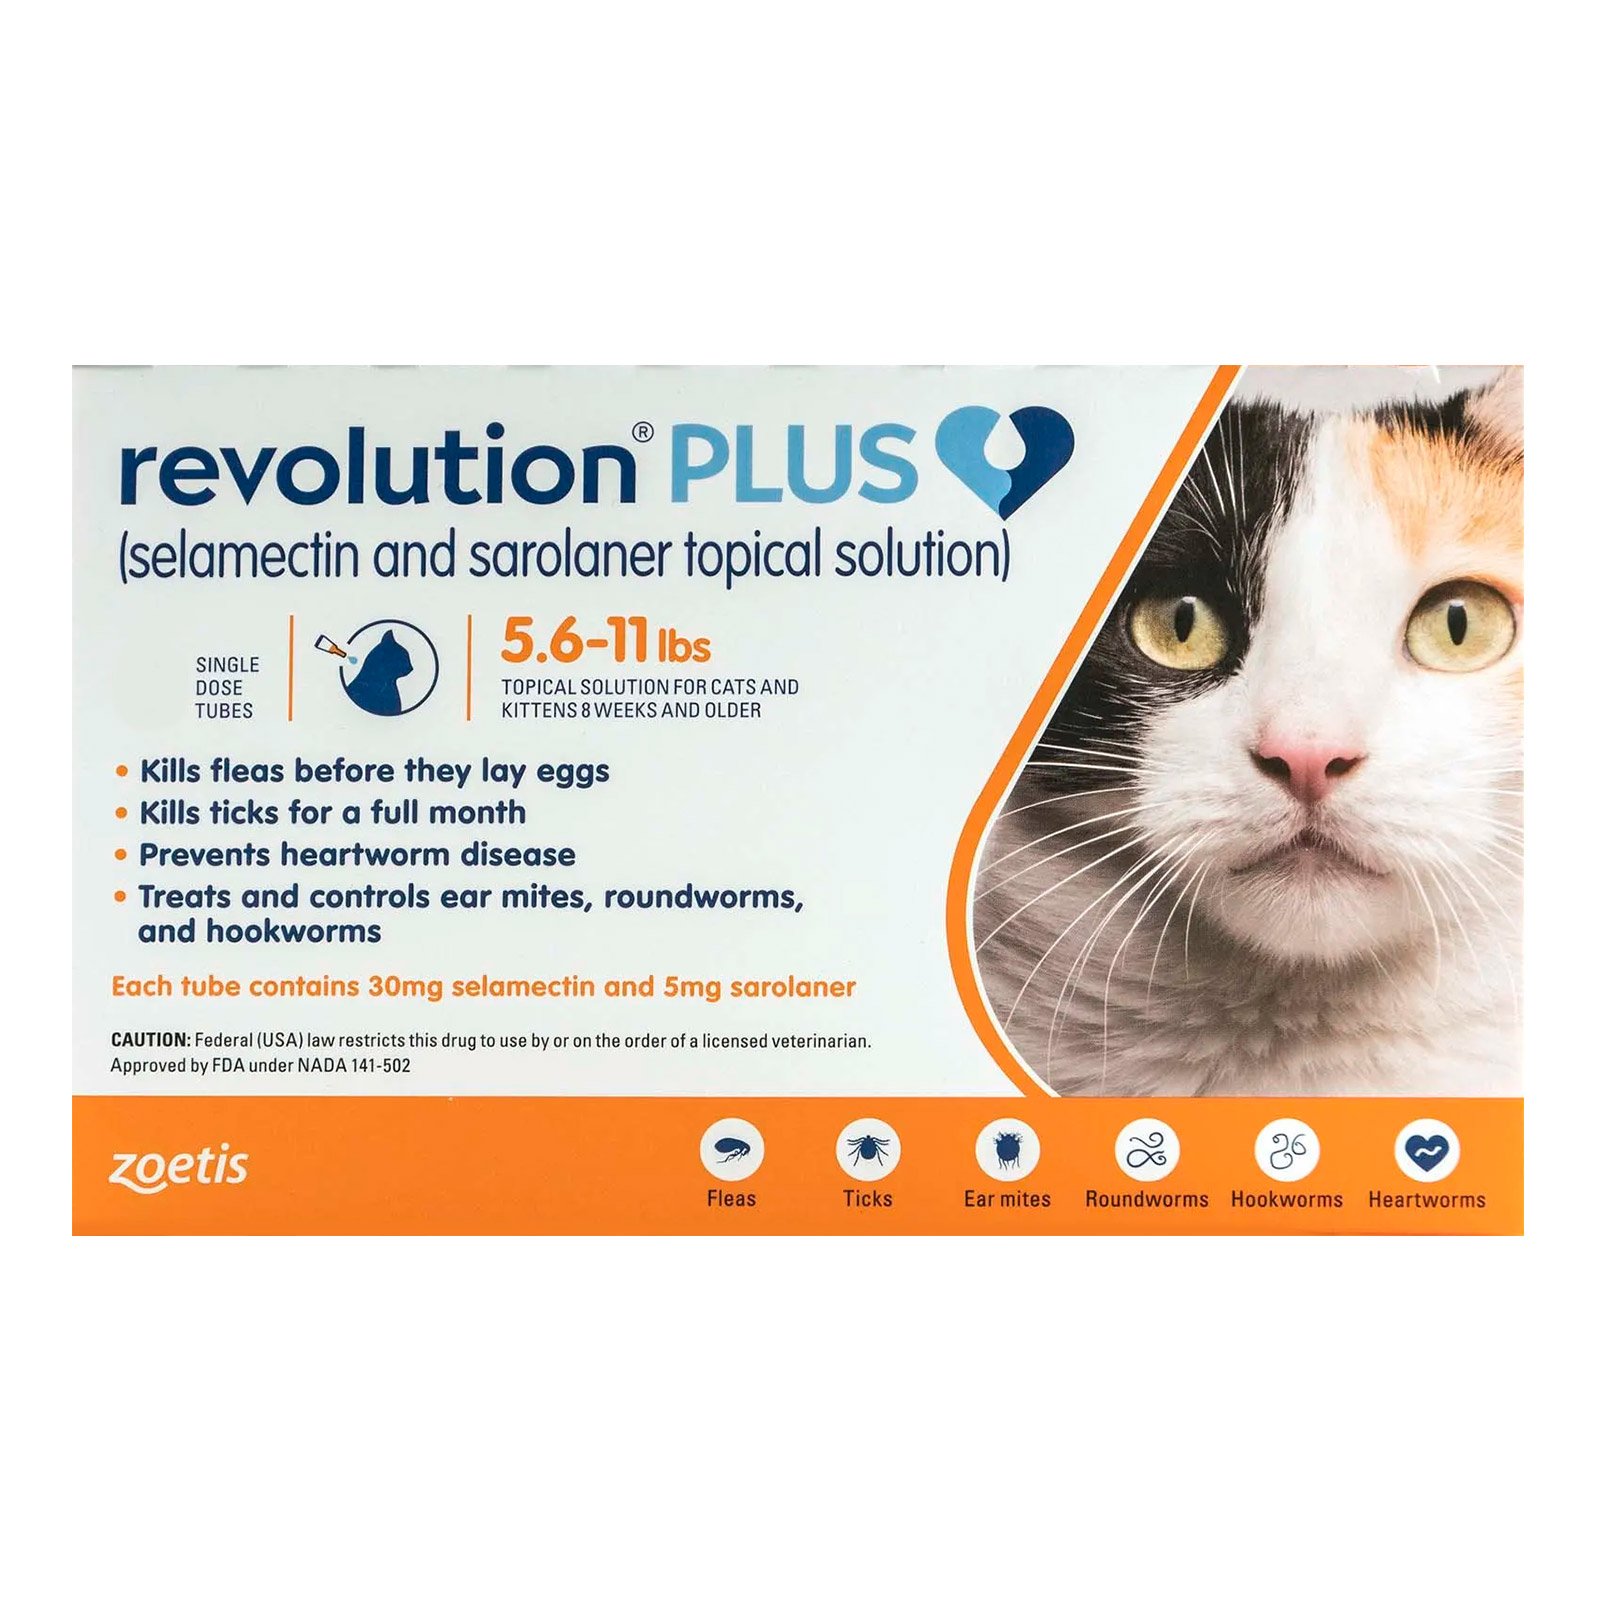 revolution-plus-for-Medium-Cats-5-11lbs-3-5Kg-Orange.jpg